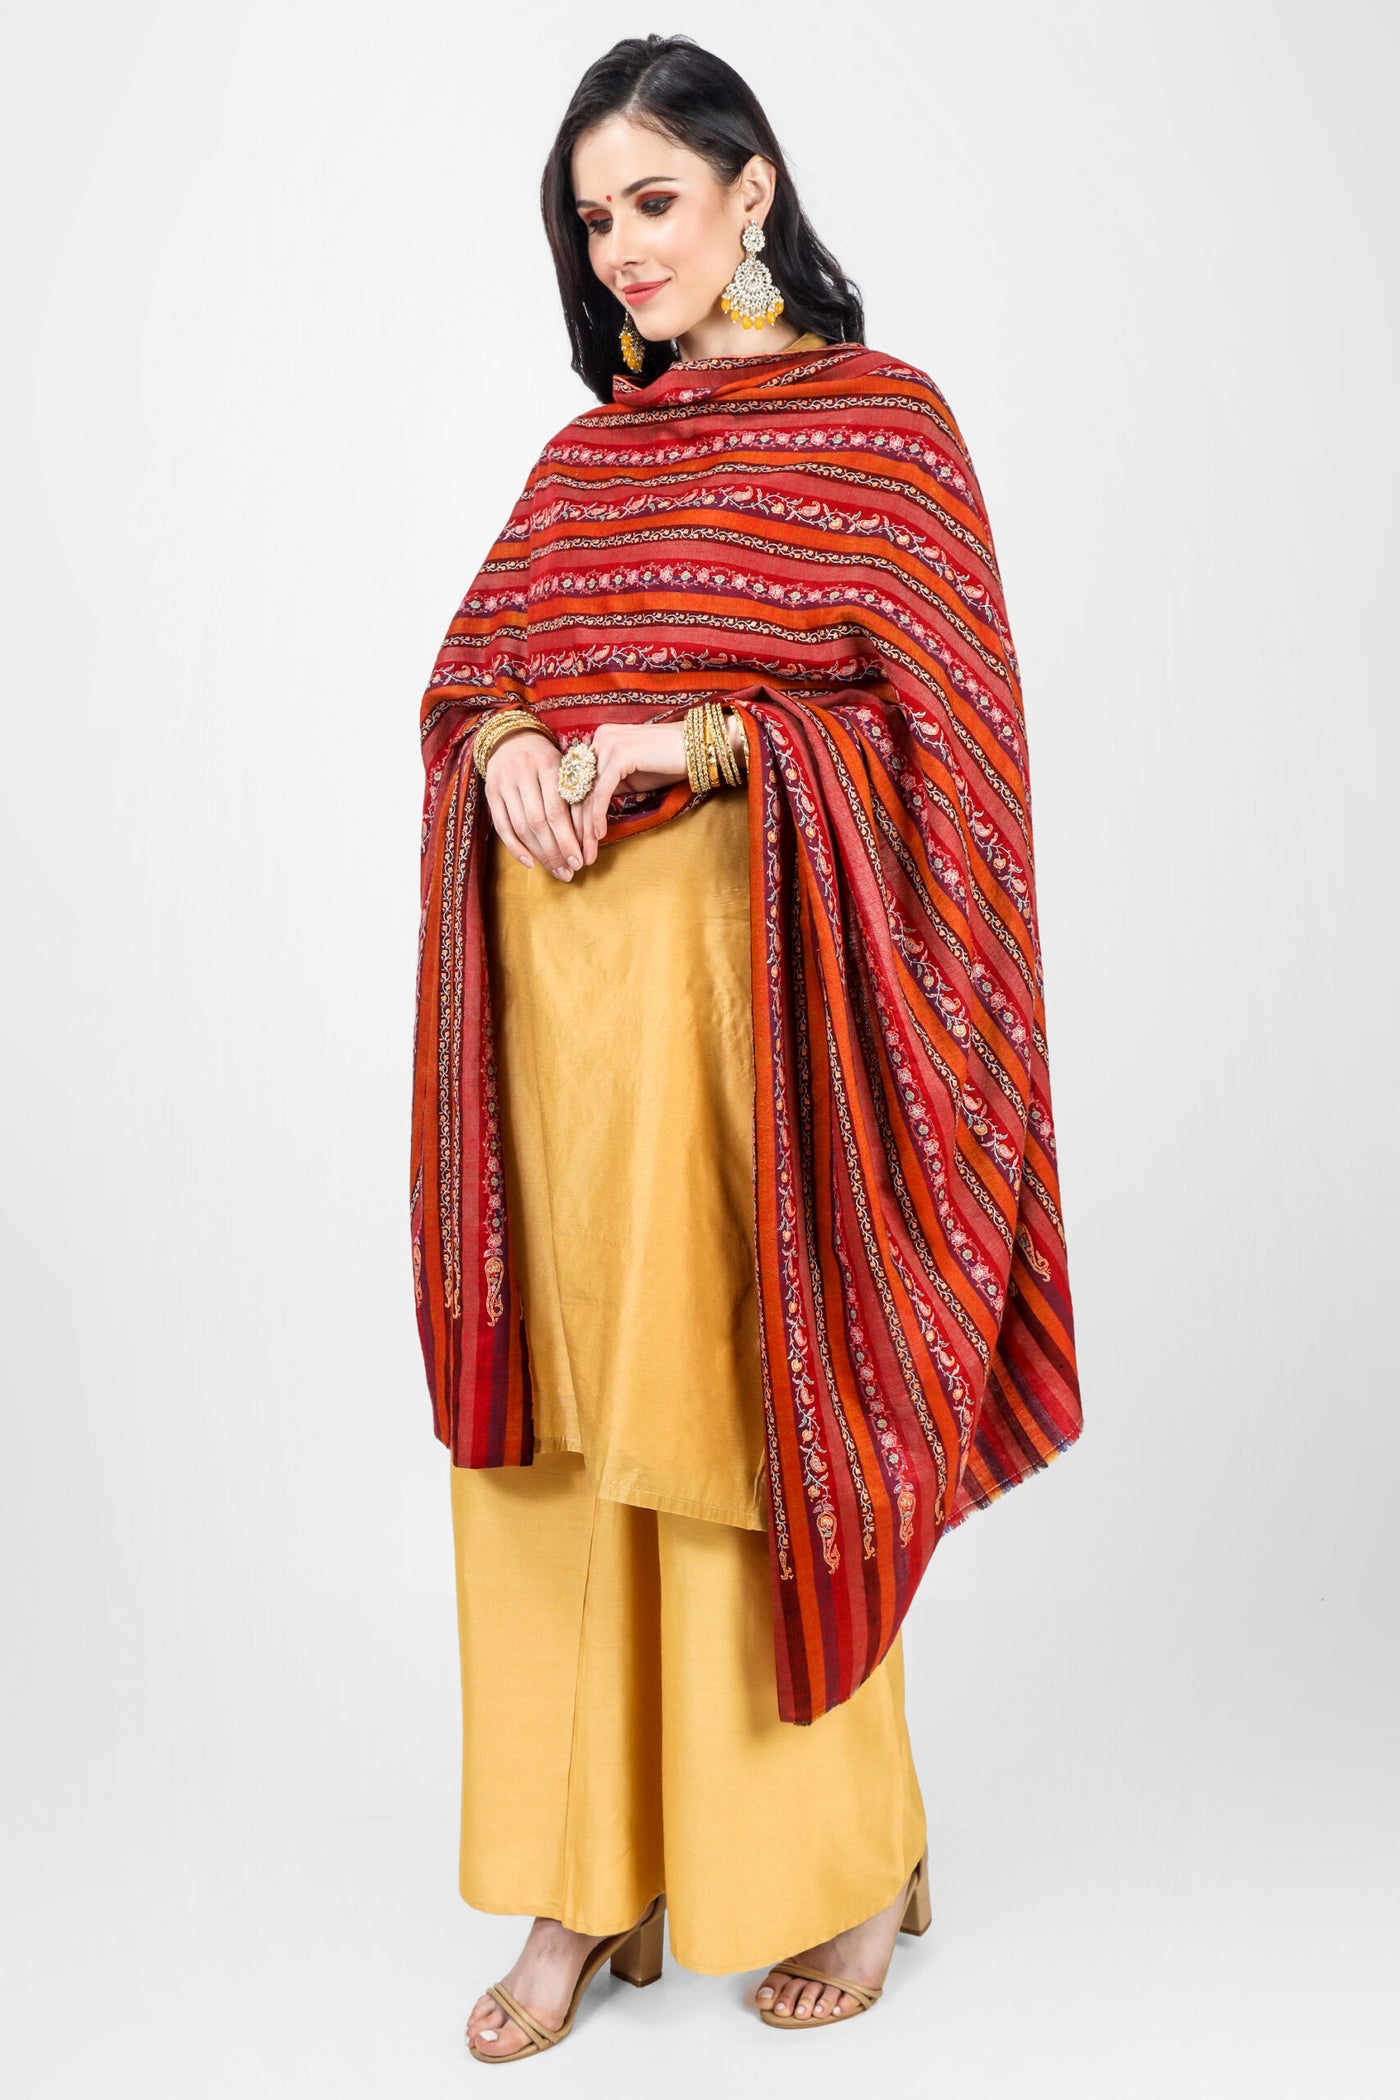 PASHMINA - Stripped Maroon & Red sozni pashmina shawl